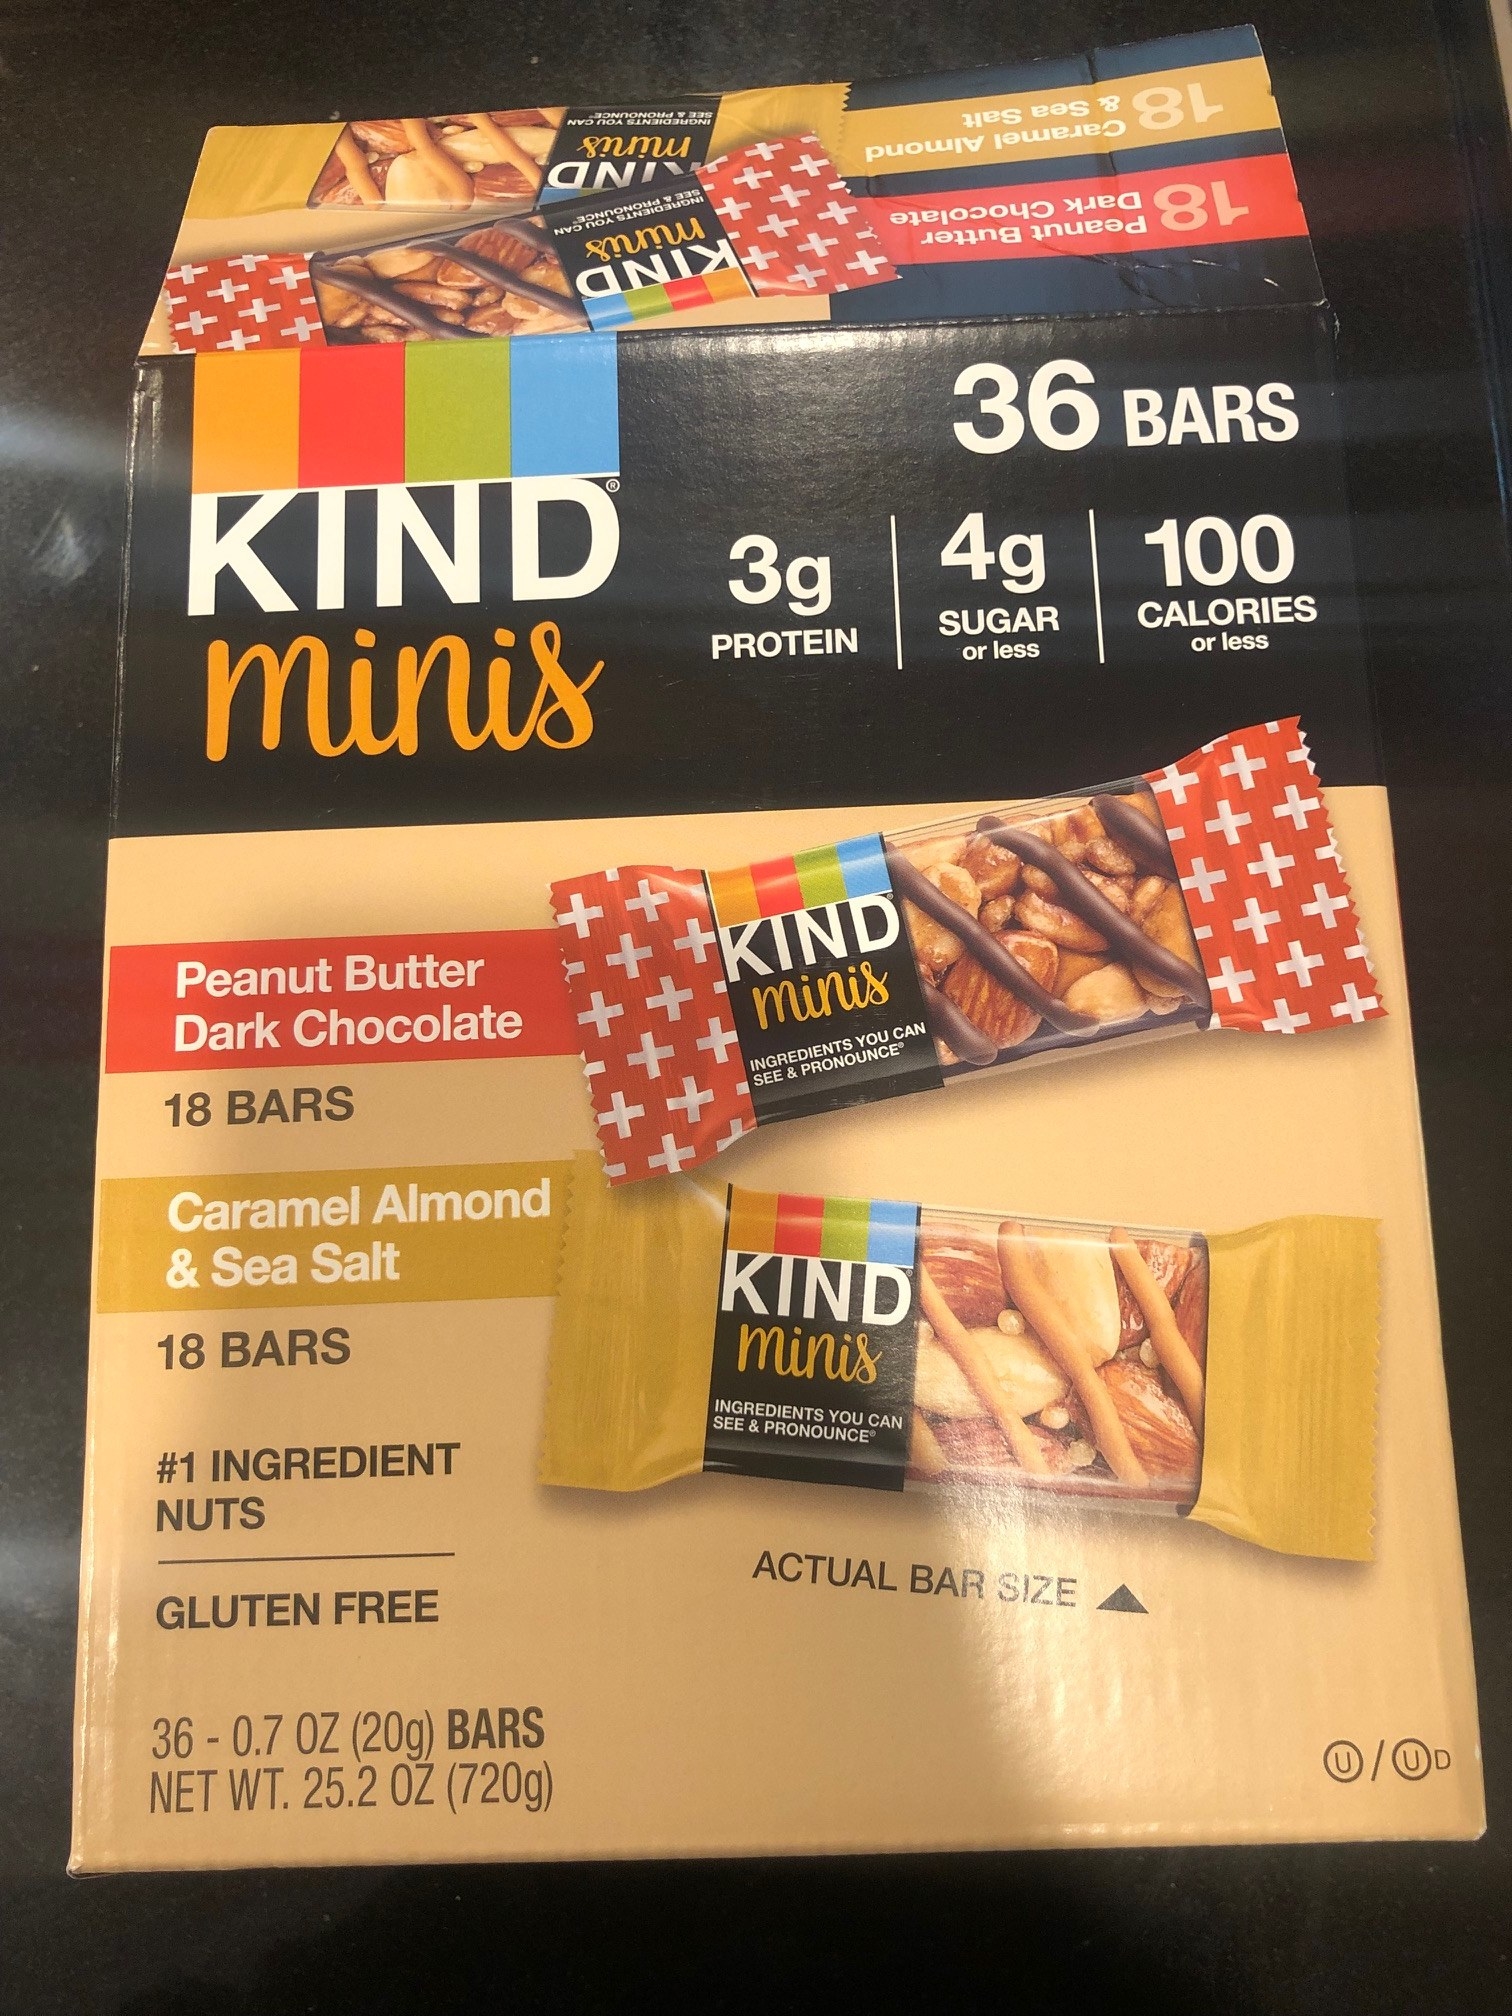 A box of Kind bars